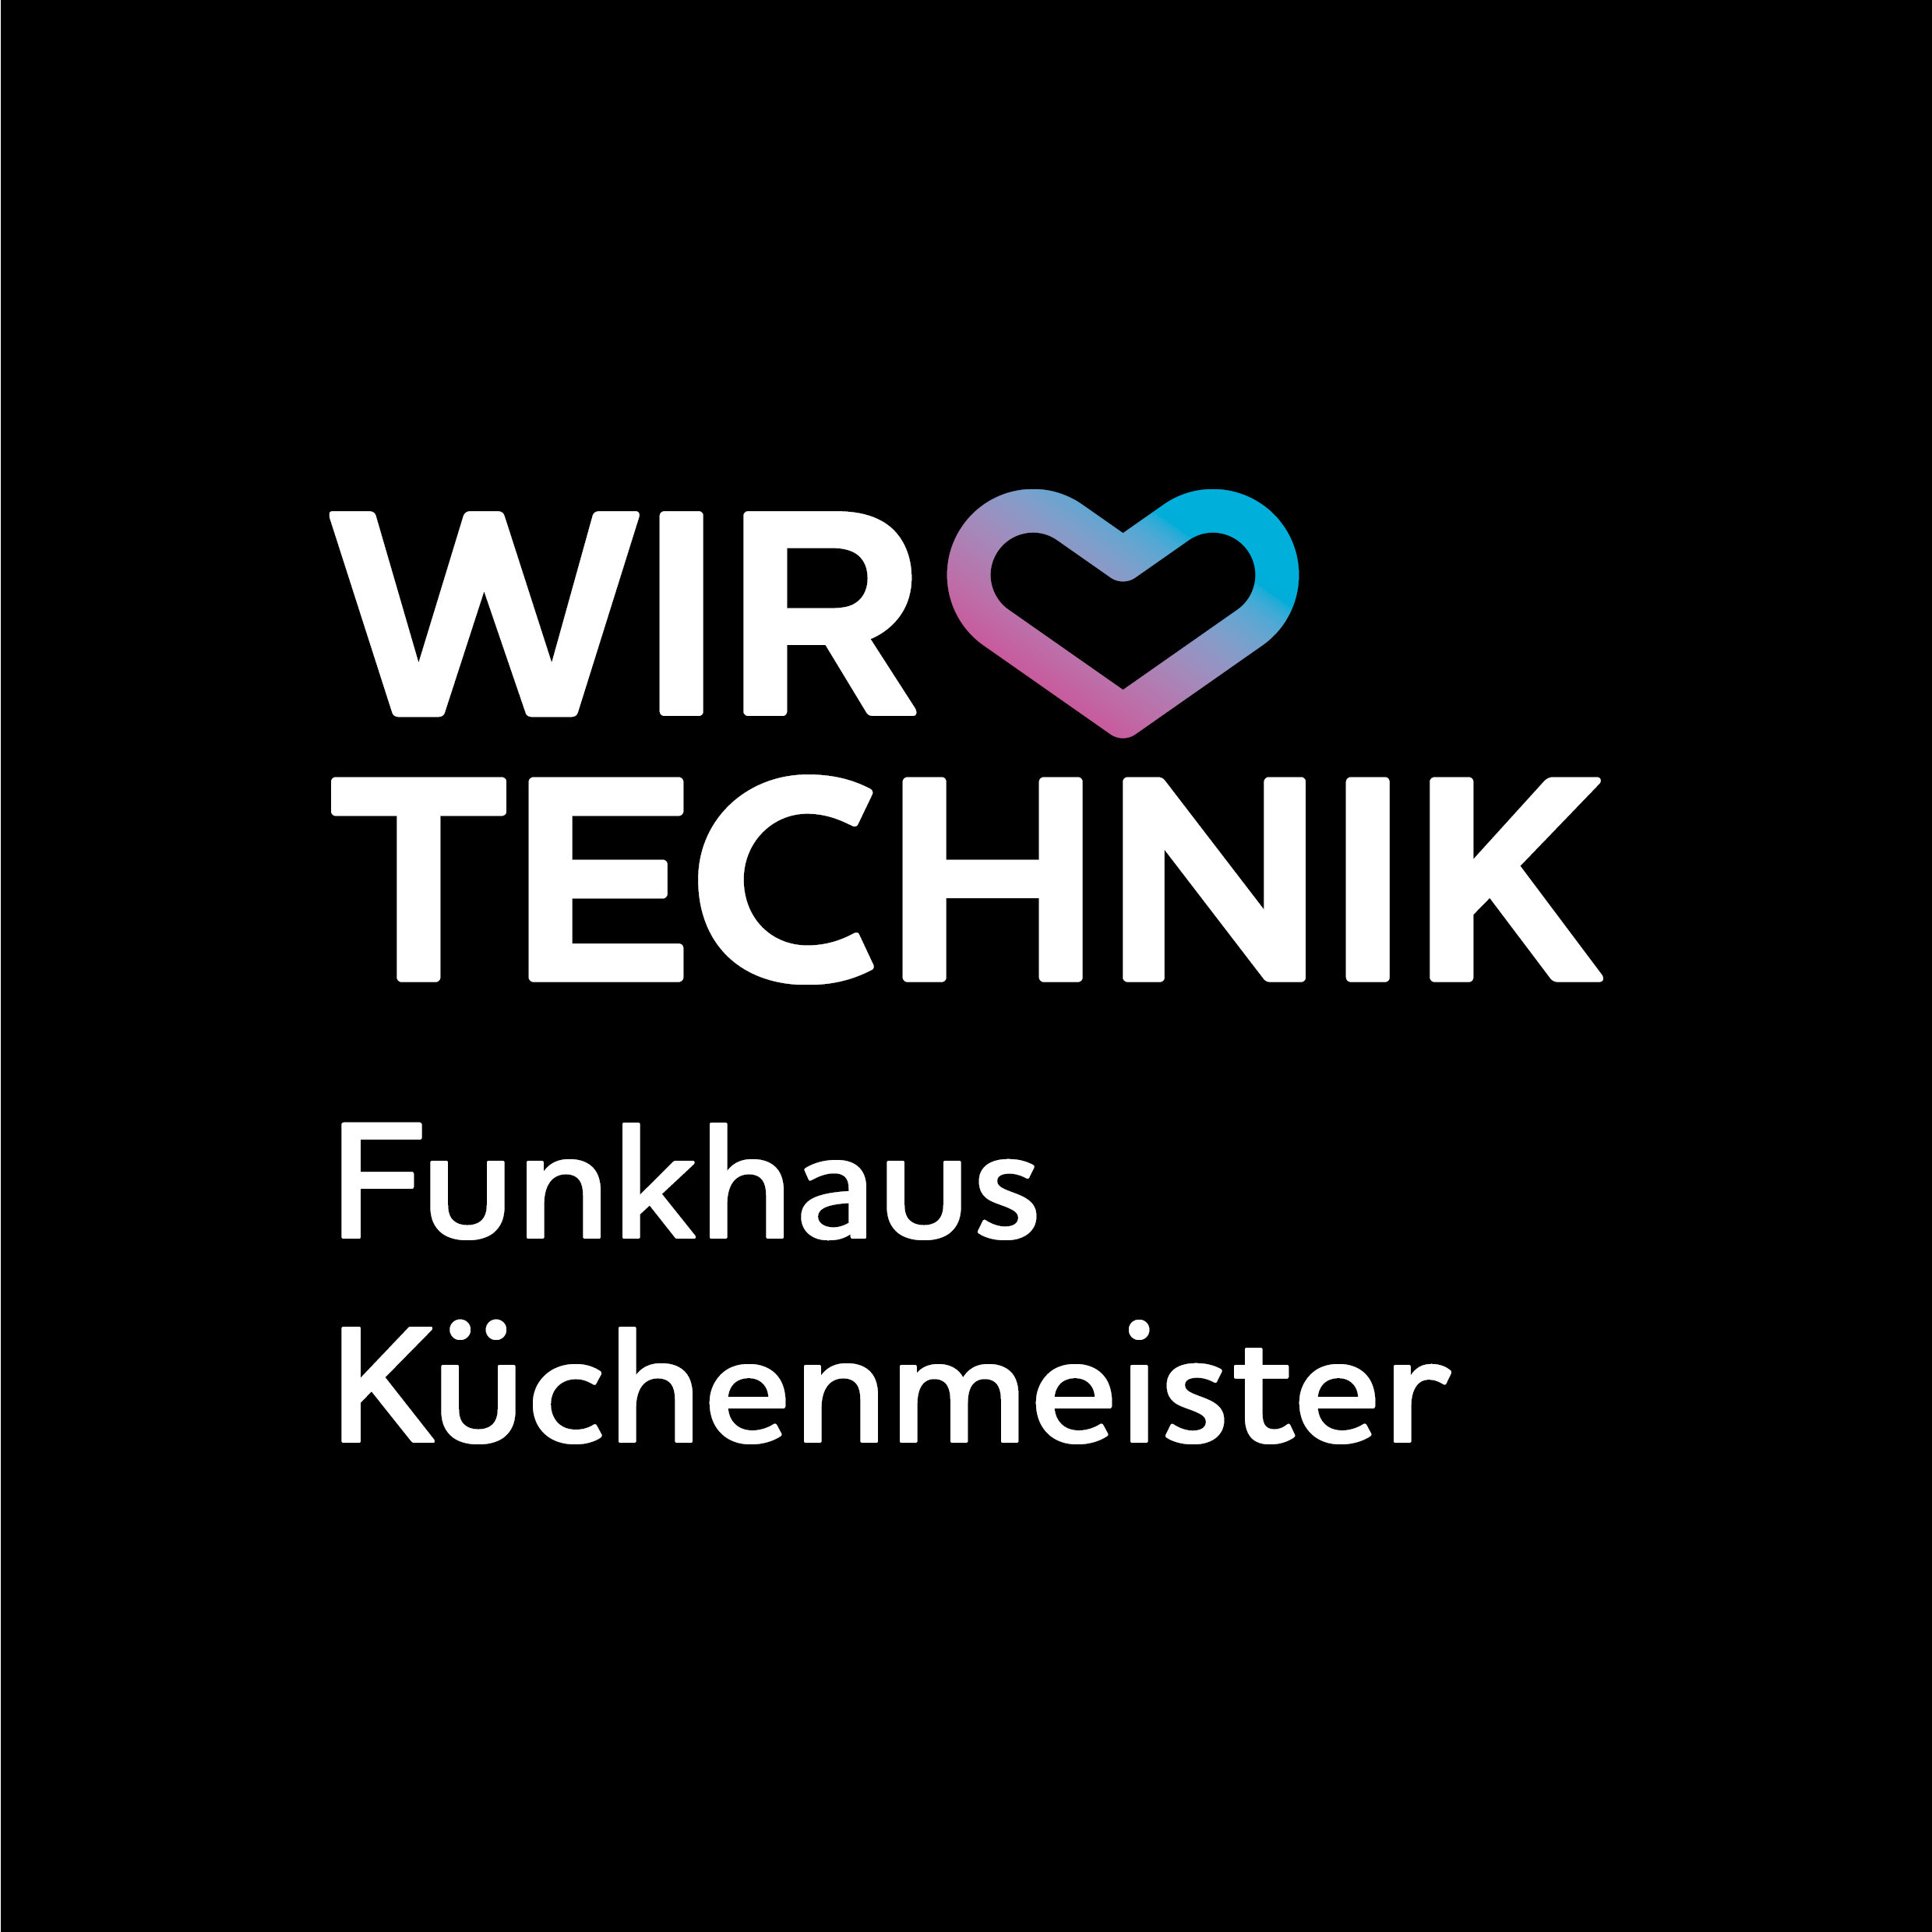 Wir lieben Technik Funkhaus Küchenmeister - Electronics Store - Schwerin - 0385 5815031 Germany | ShowMeLocal.com